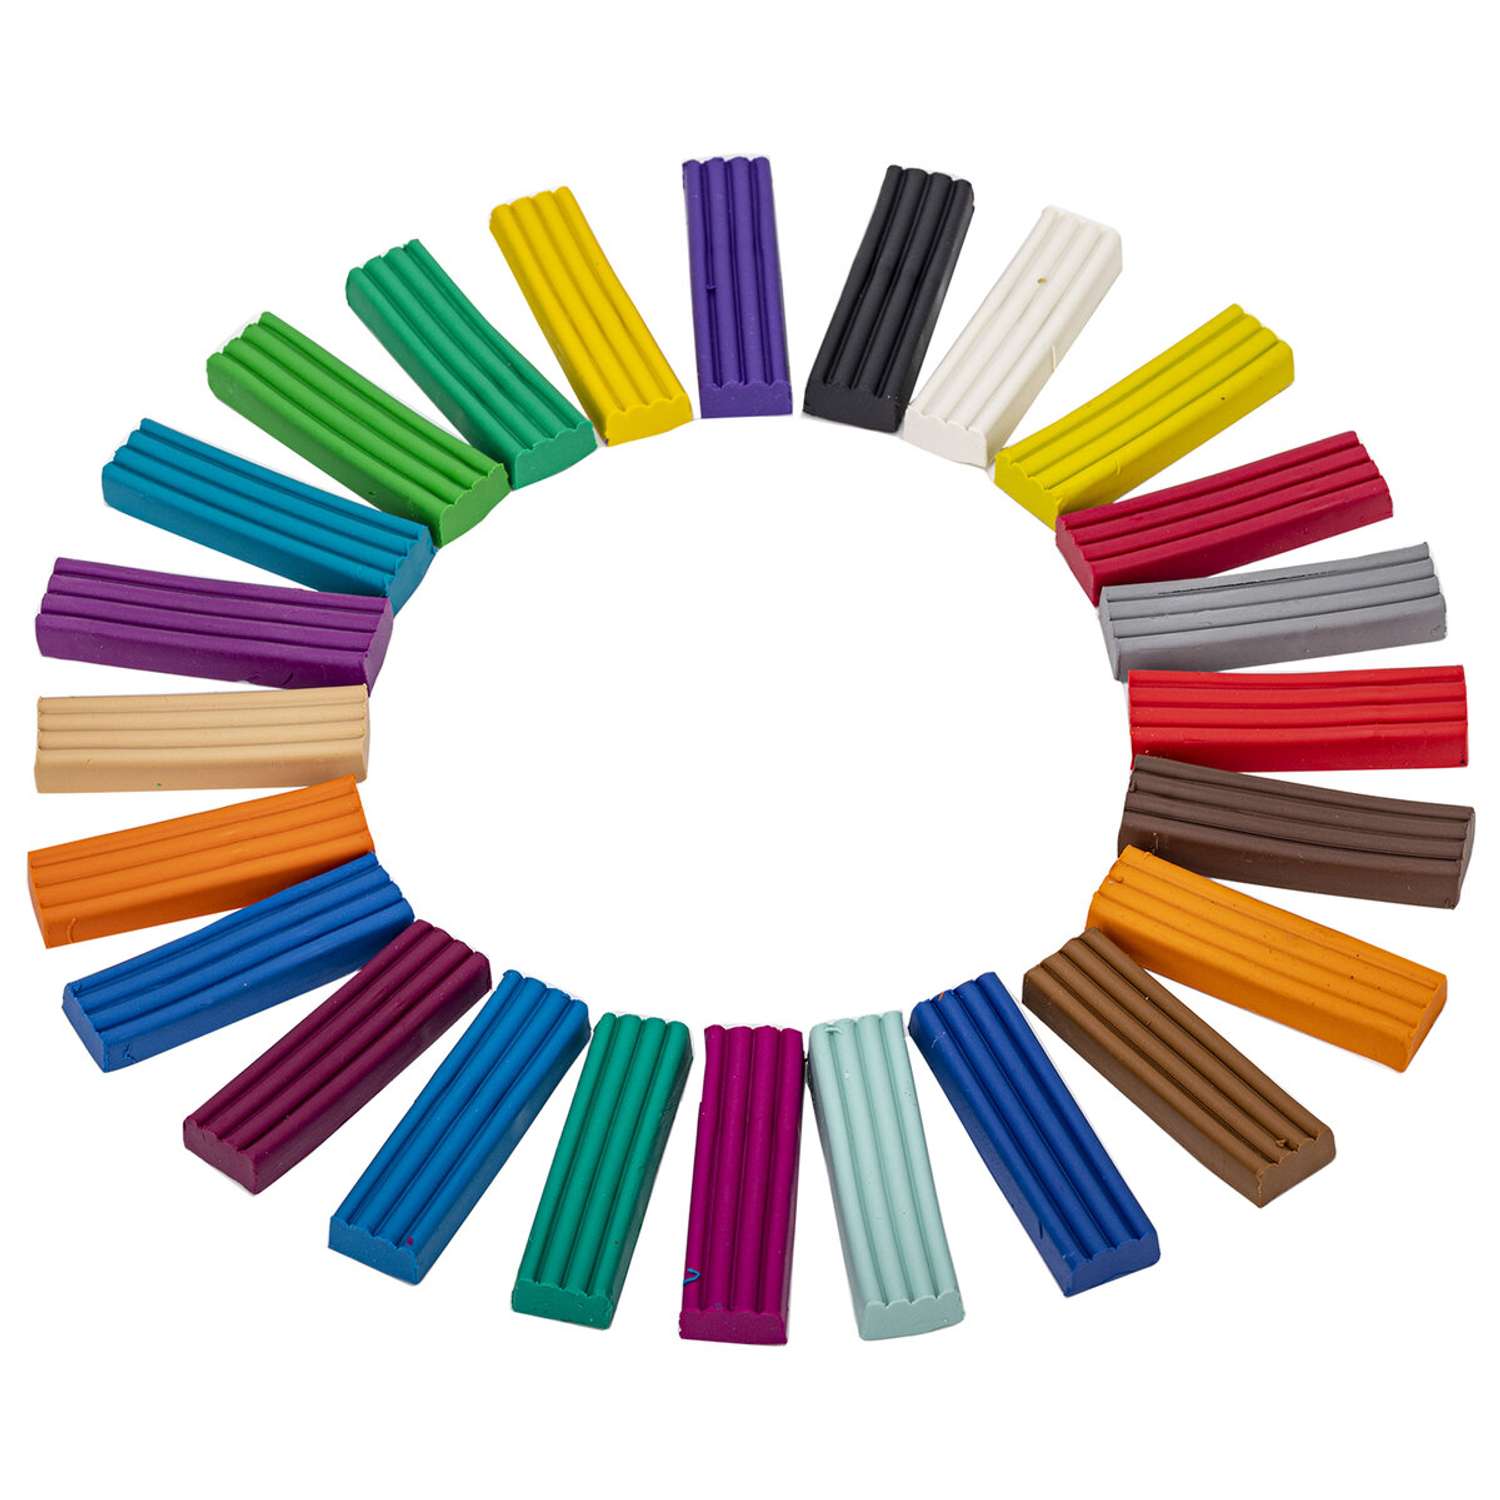 Пластилин классический Brauberg для лепки набор 24 цвета - фото 4